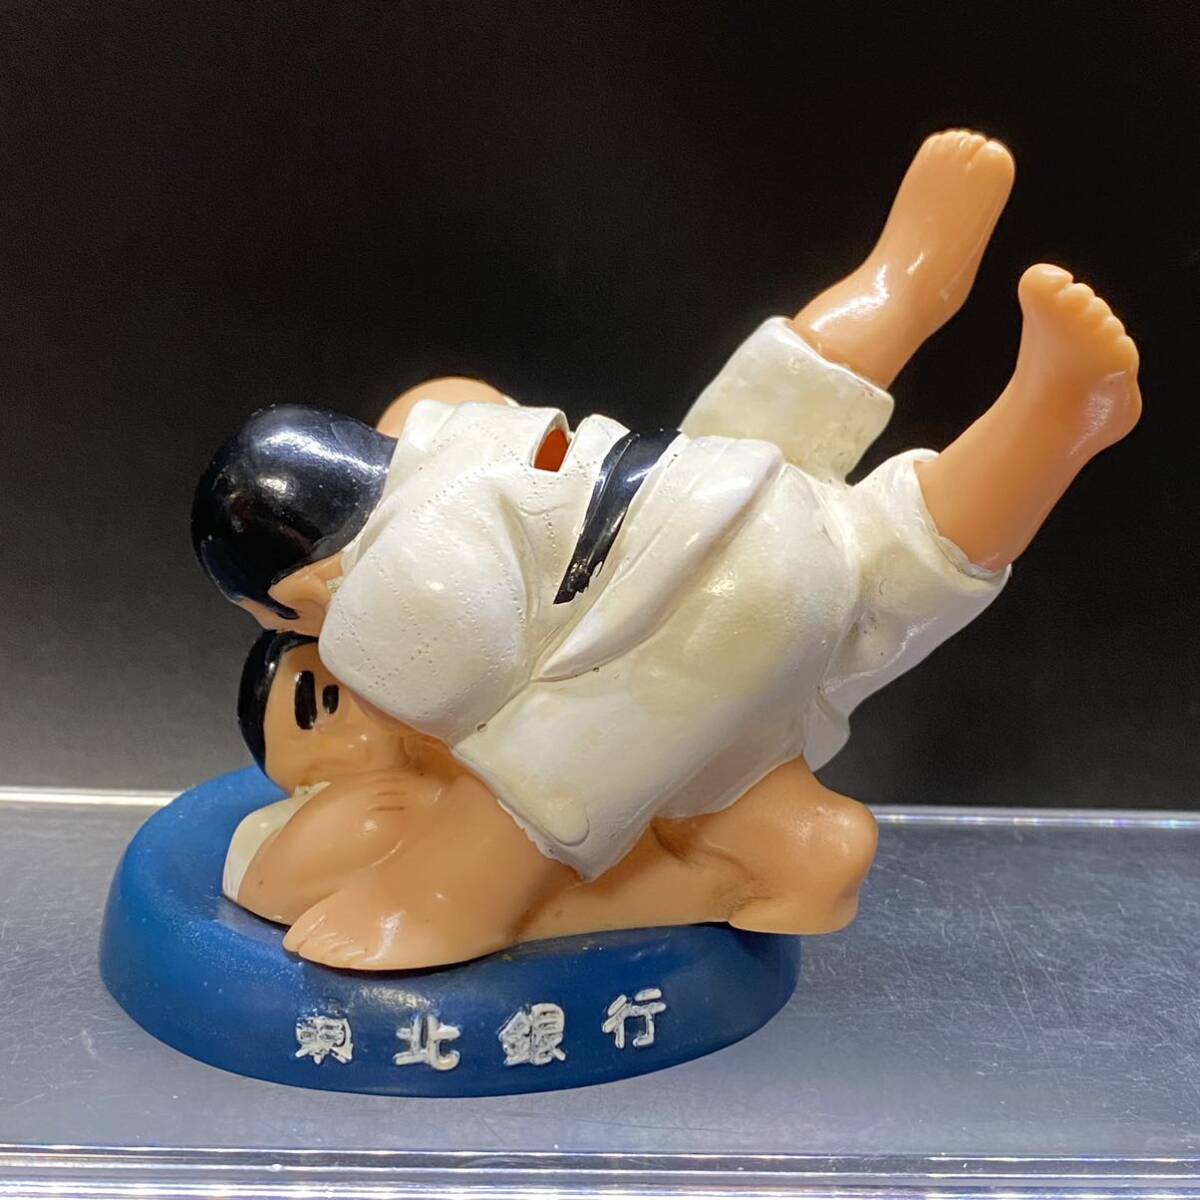  Tohoku Bank Iwate country body judo sofvi savings box Showa Retro antique enterprise thing doll hand coating that time thing sport rare rare Bank Novelty 